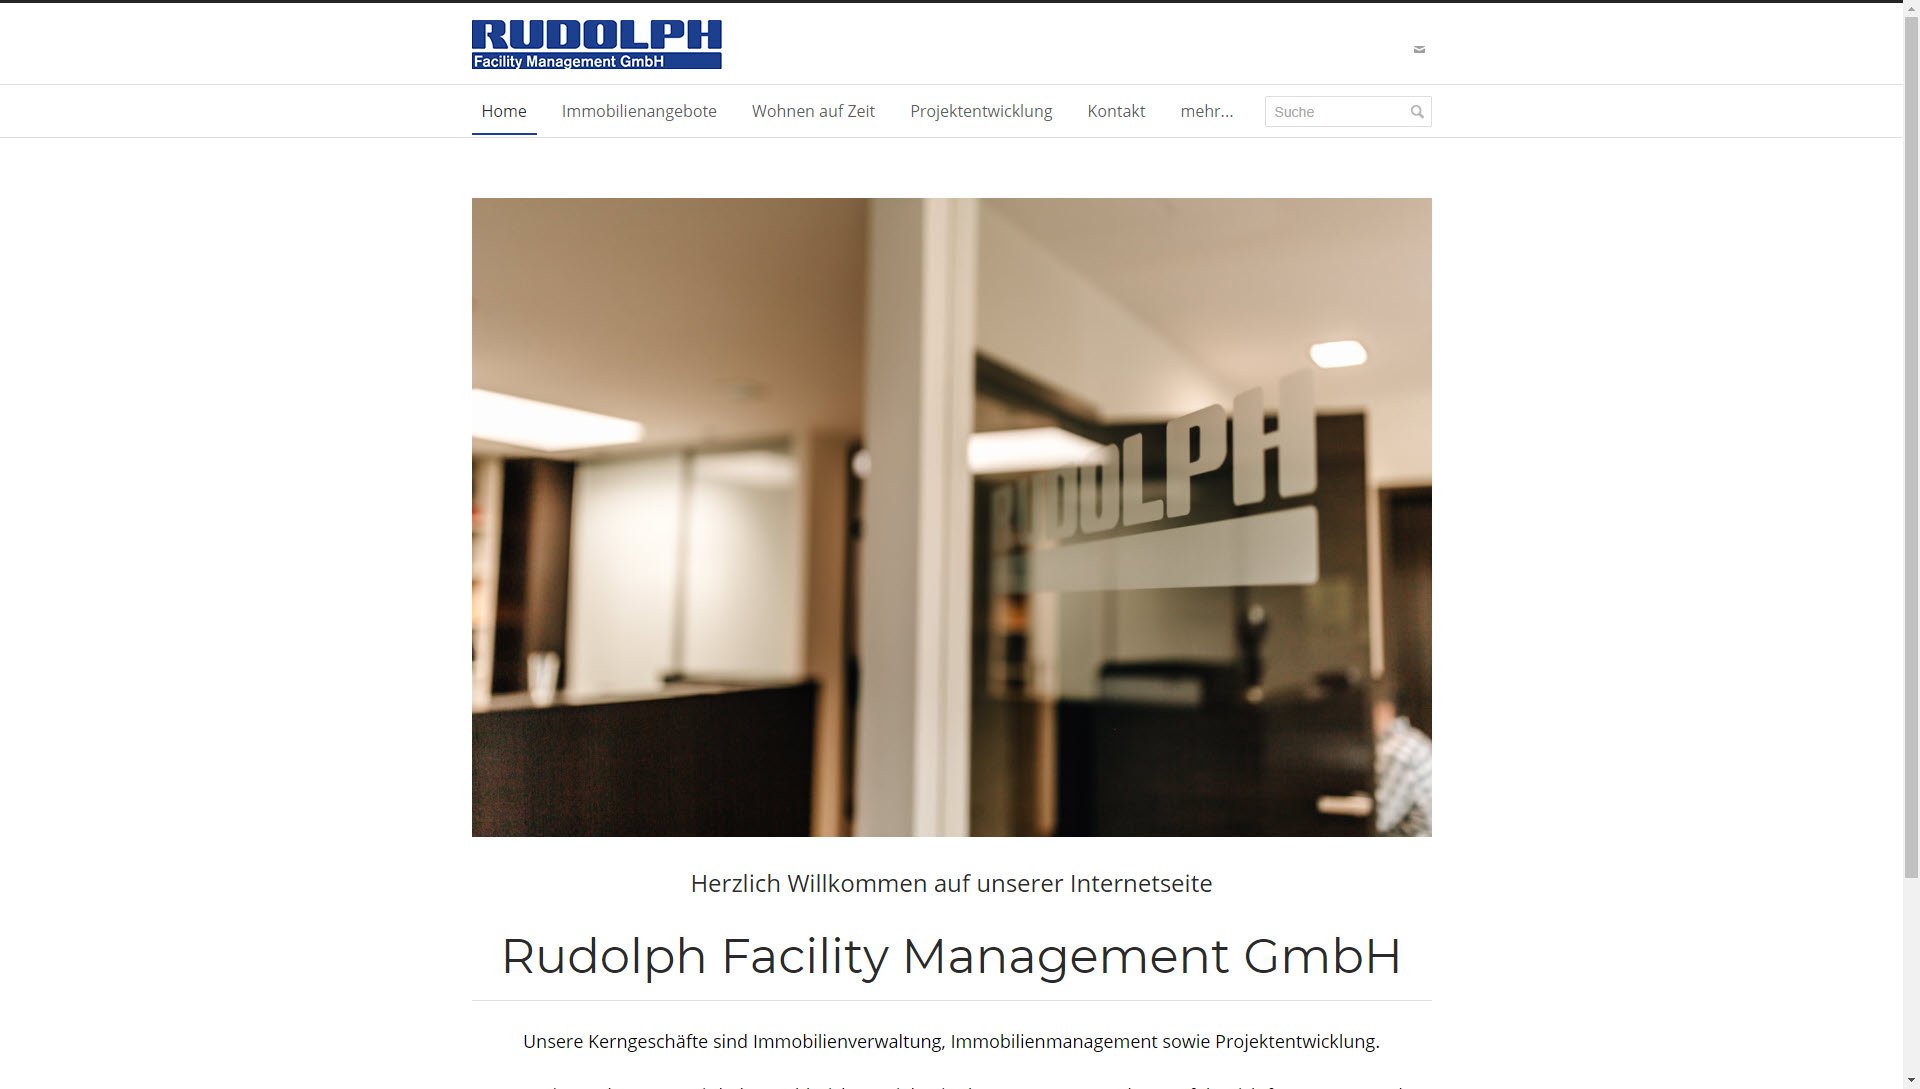 Rudolph Facility Management GmbH